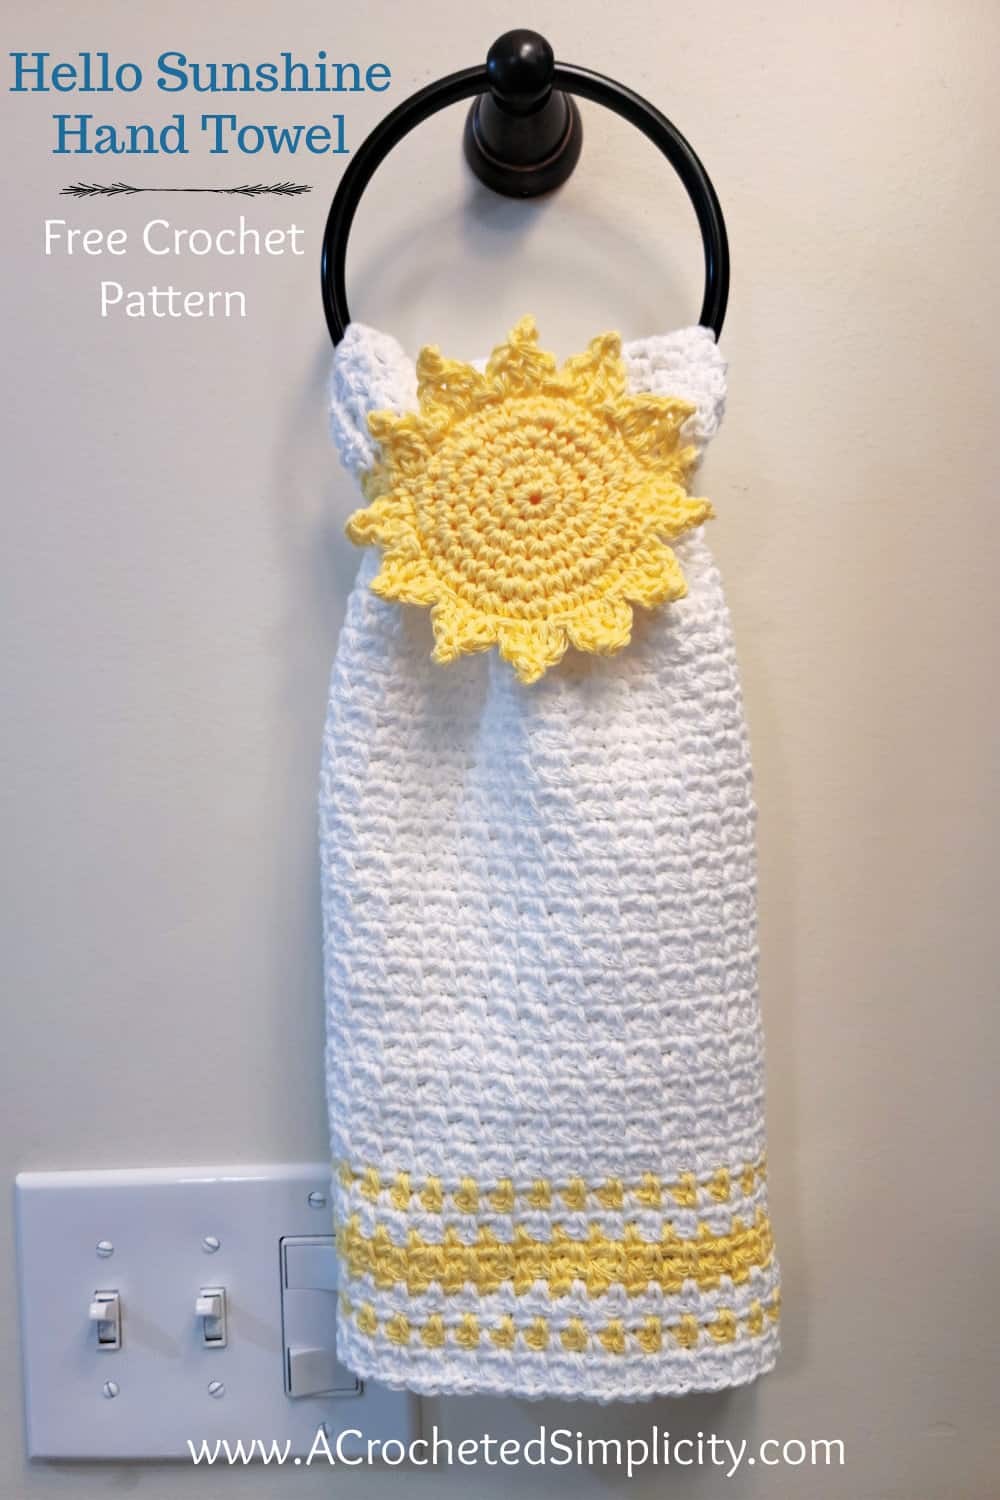 32 Crochet Jacket Patterns - Crochet News